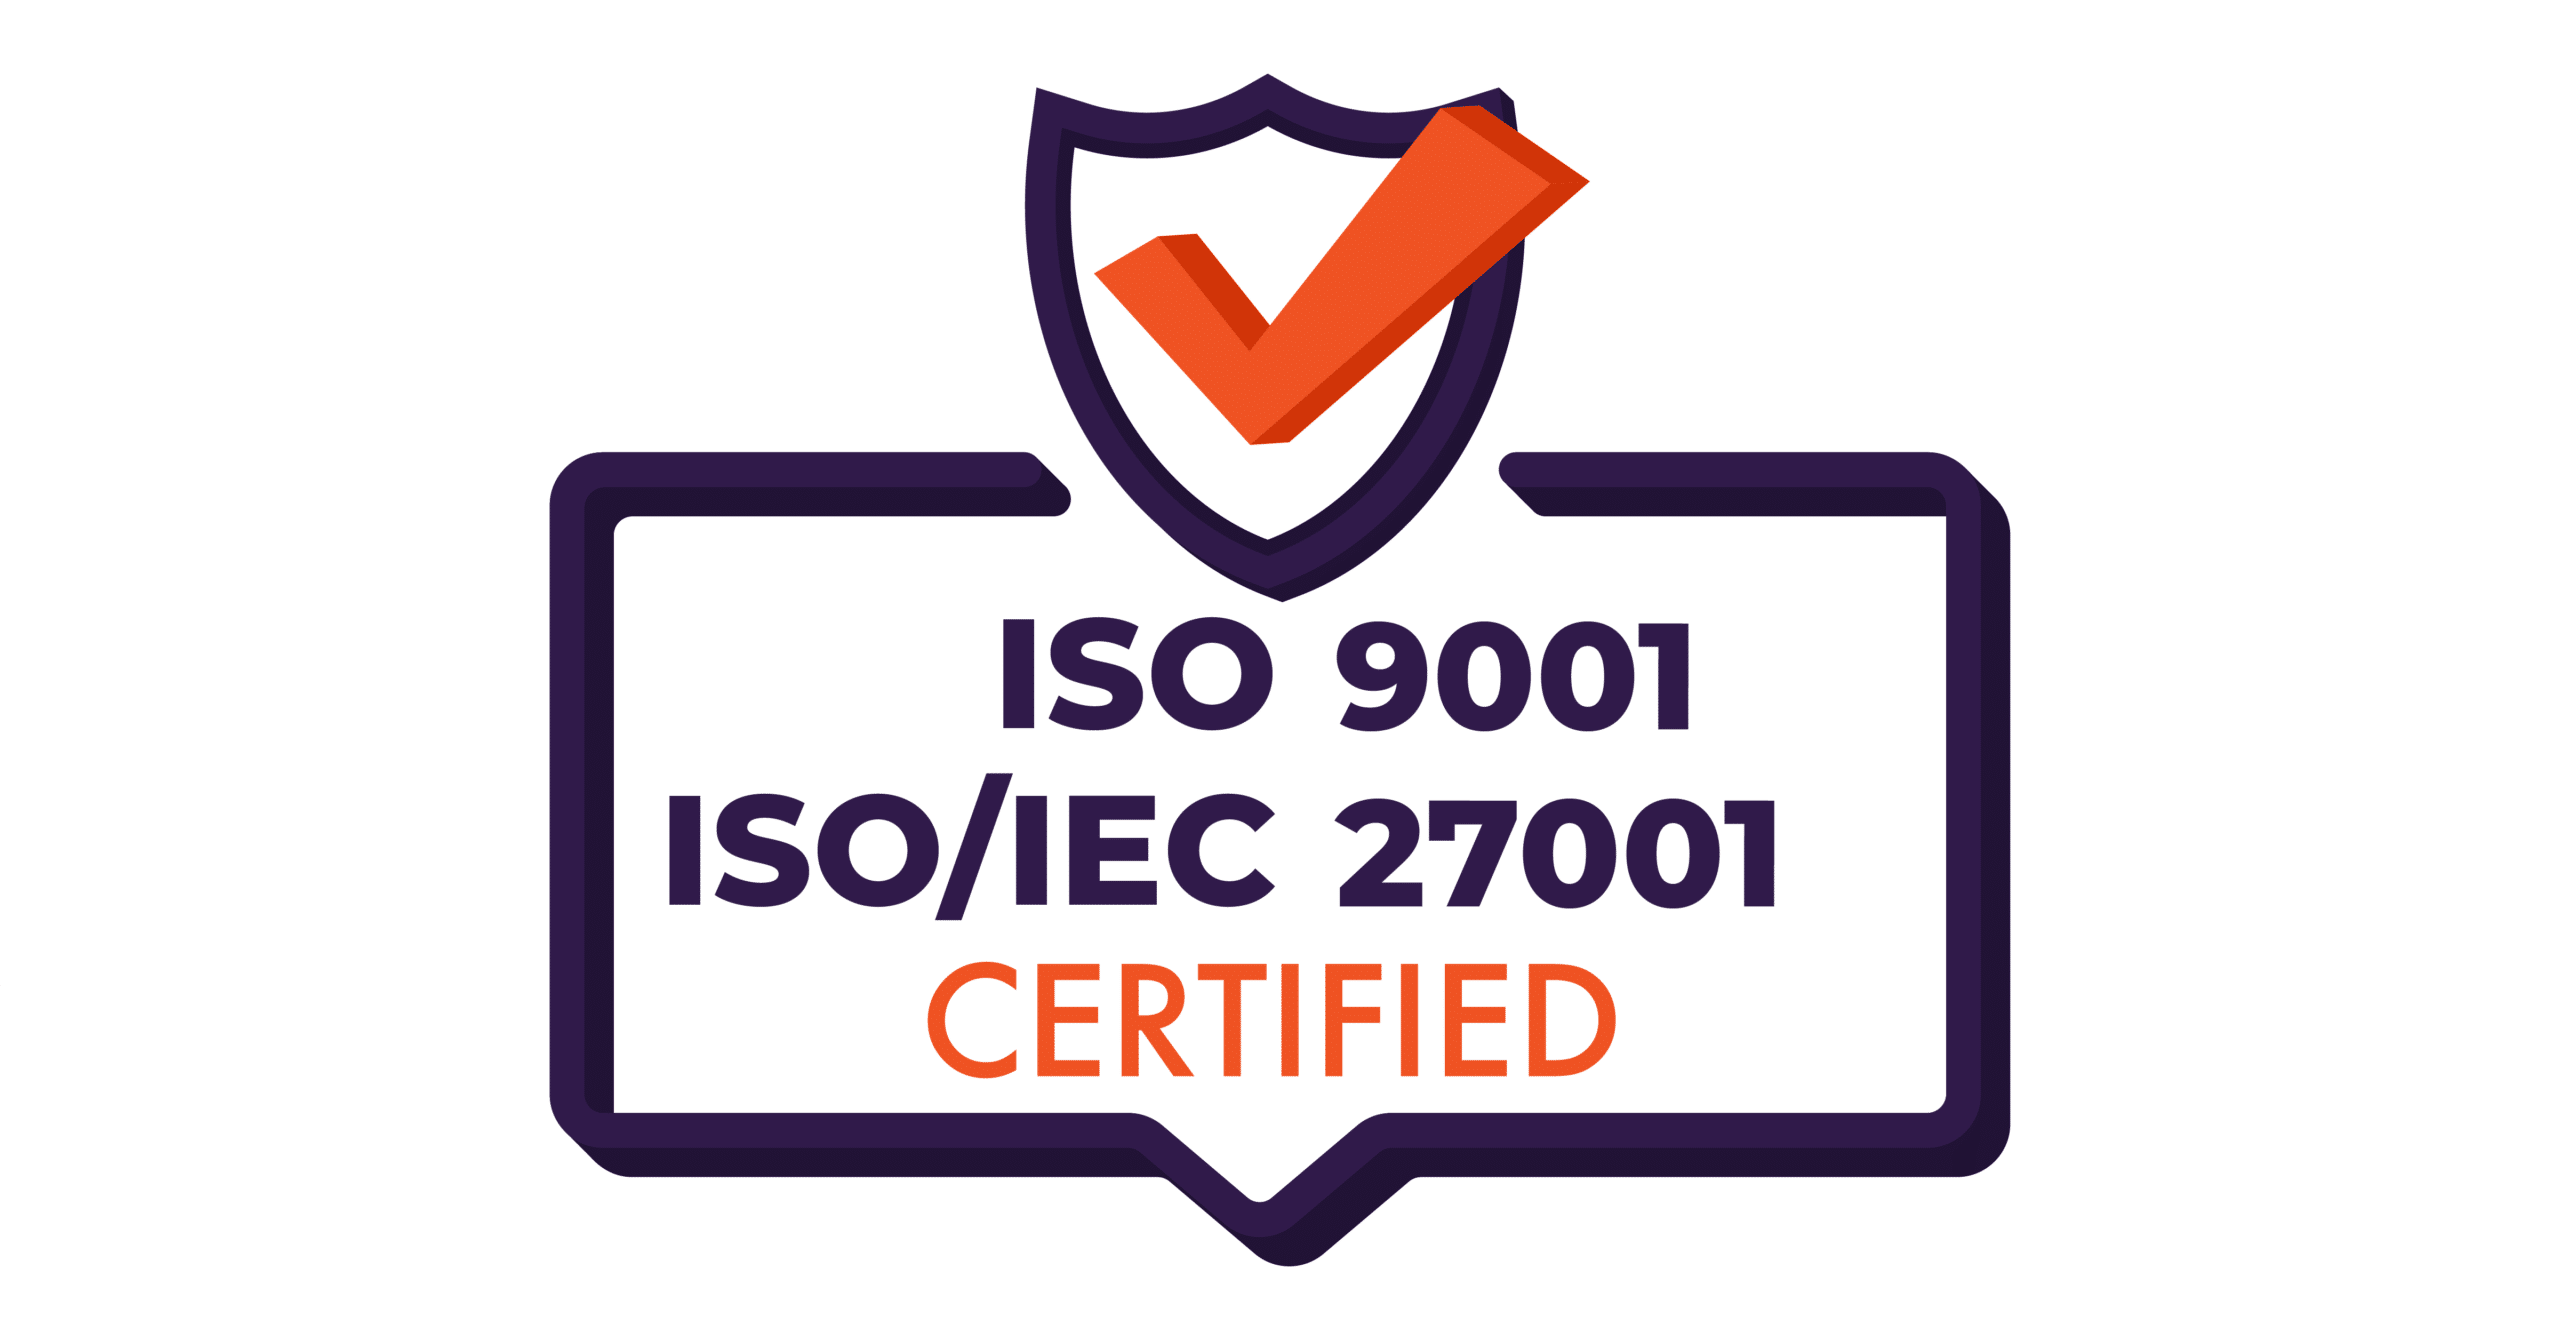 SCW.AI is ISO/IEC certified